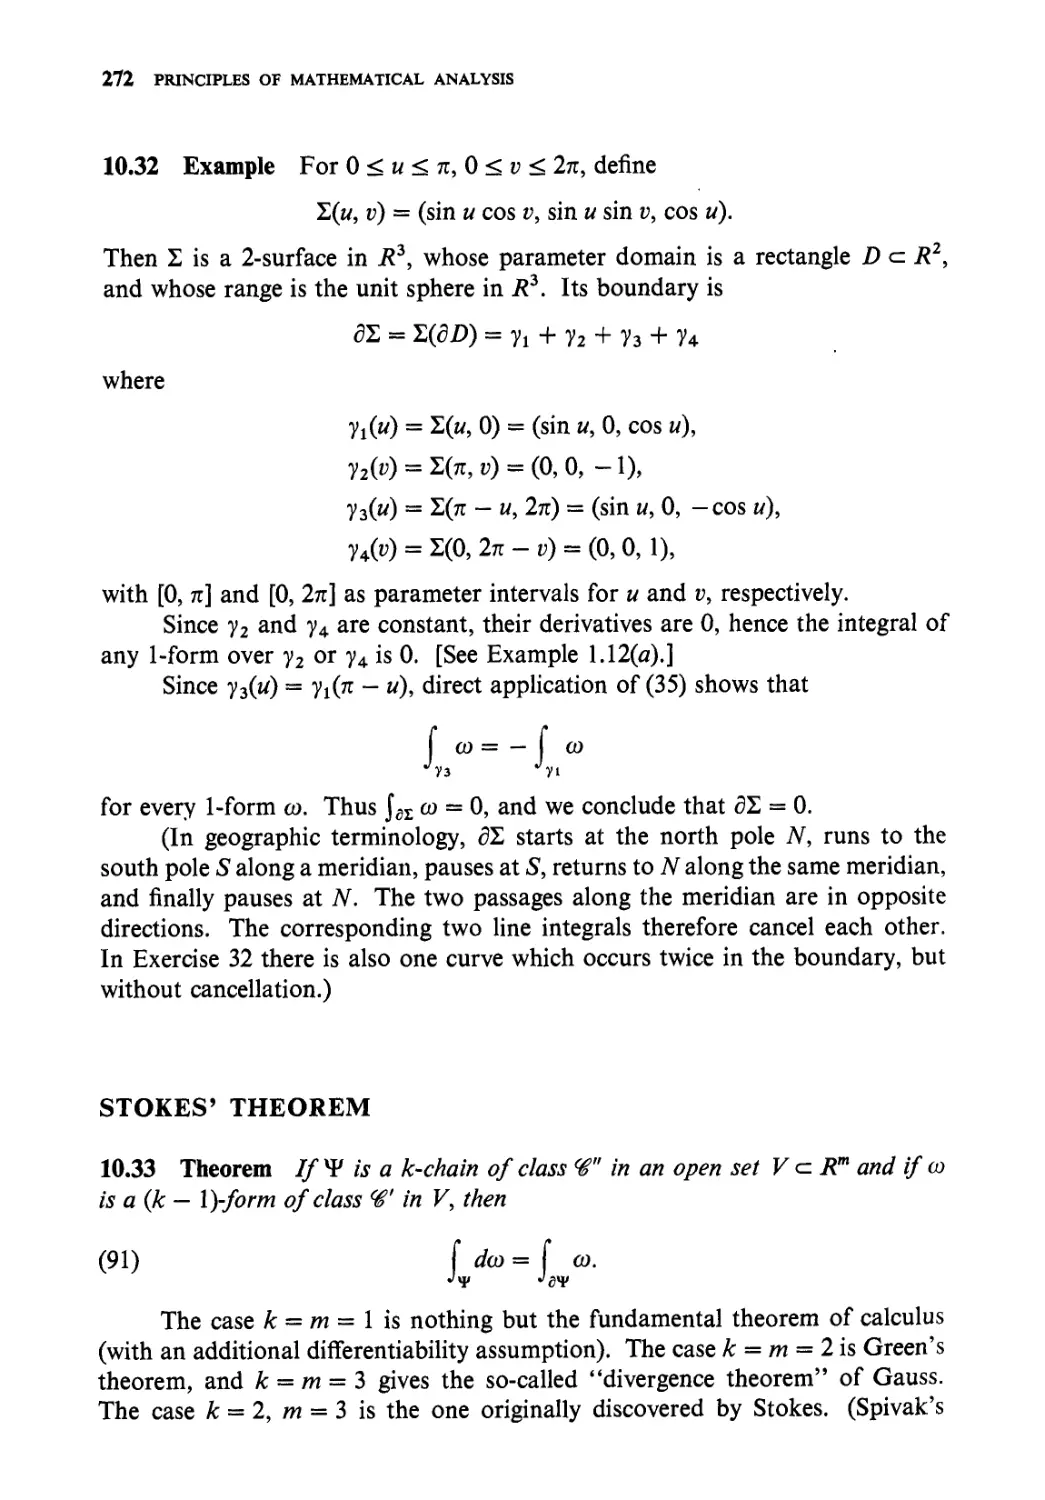 Stokes' theorem